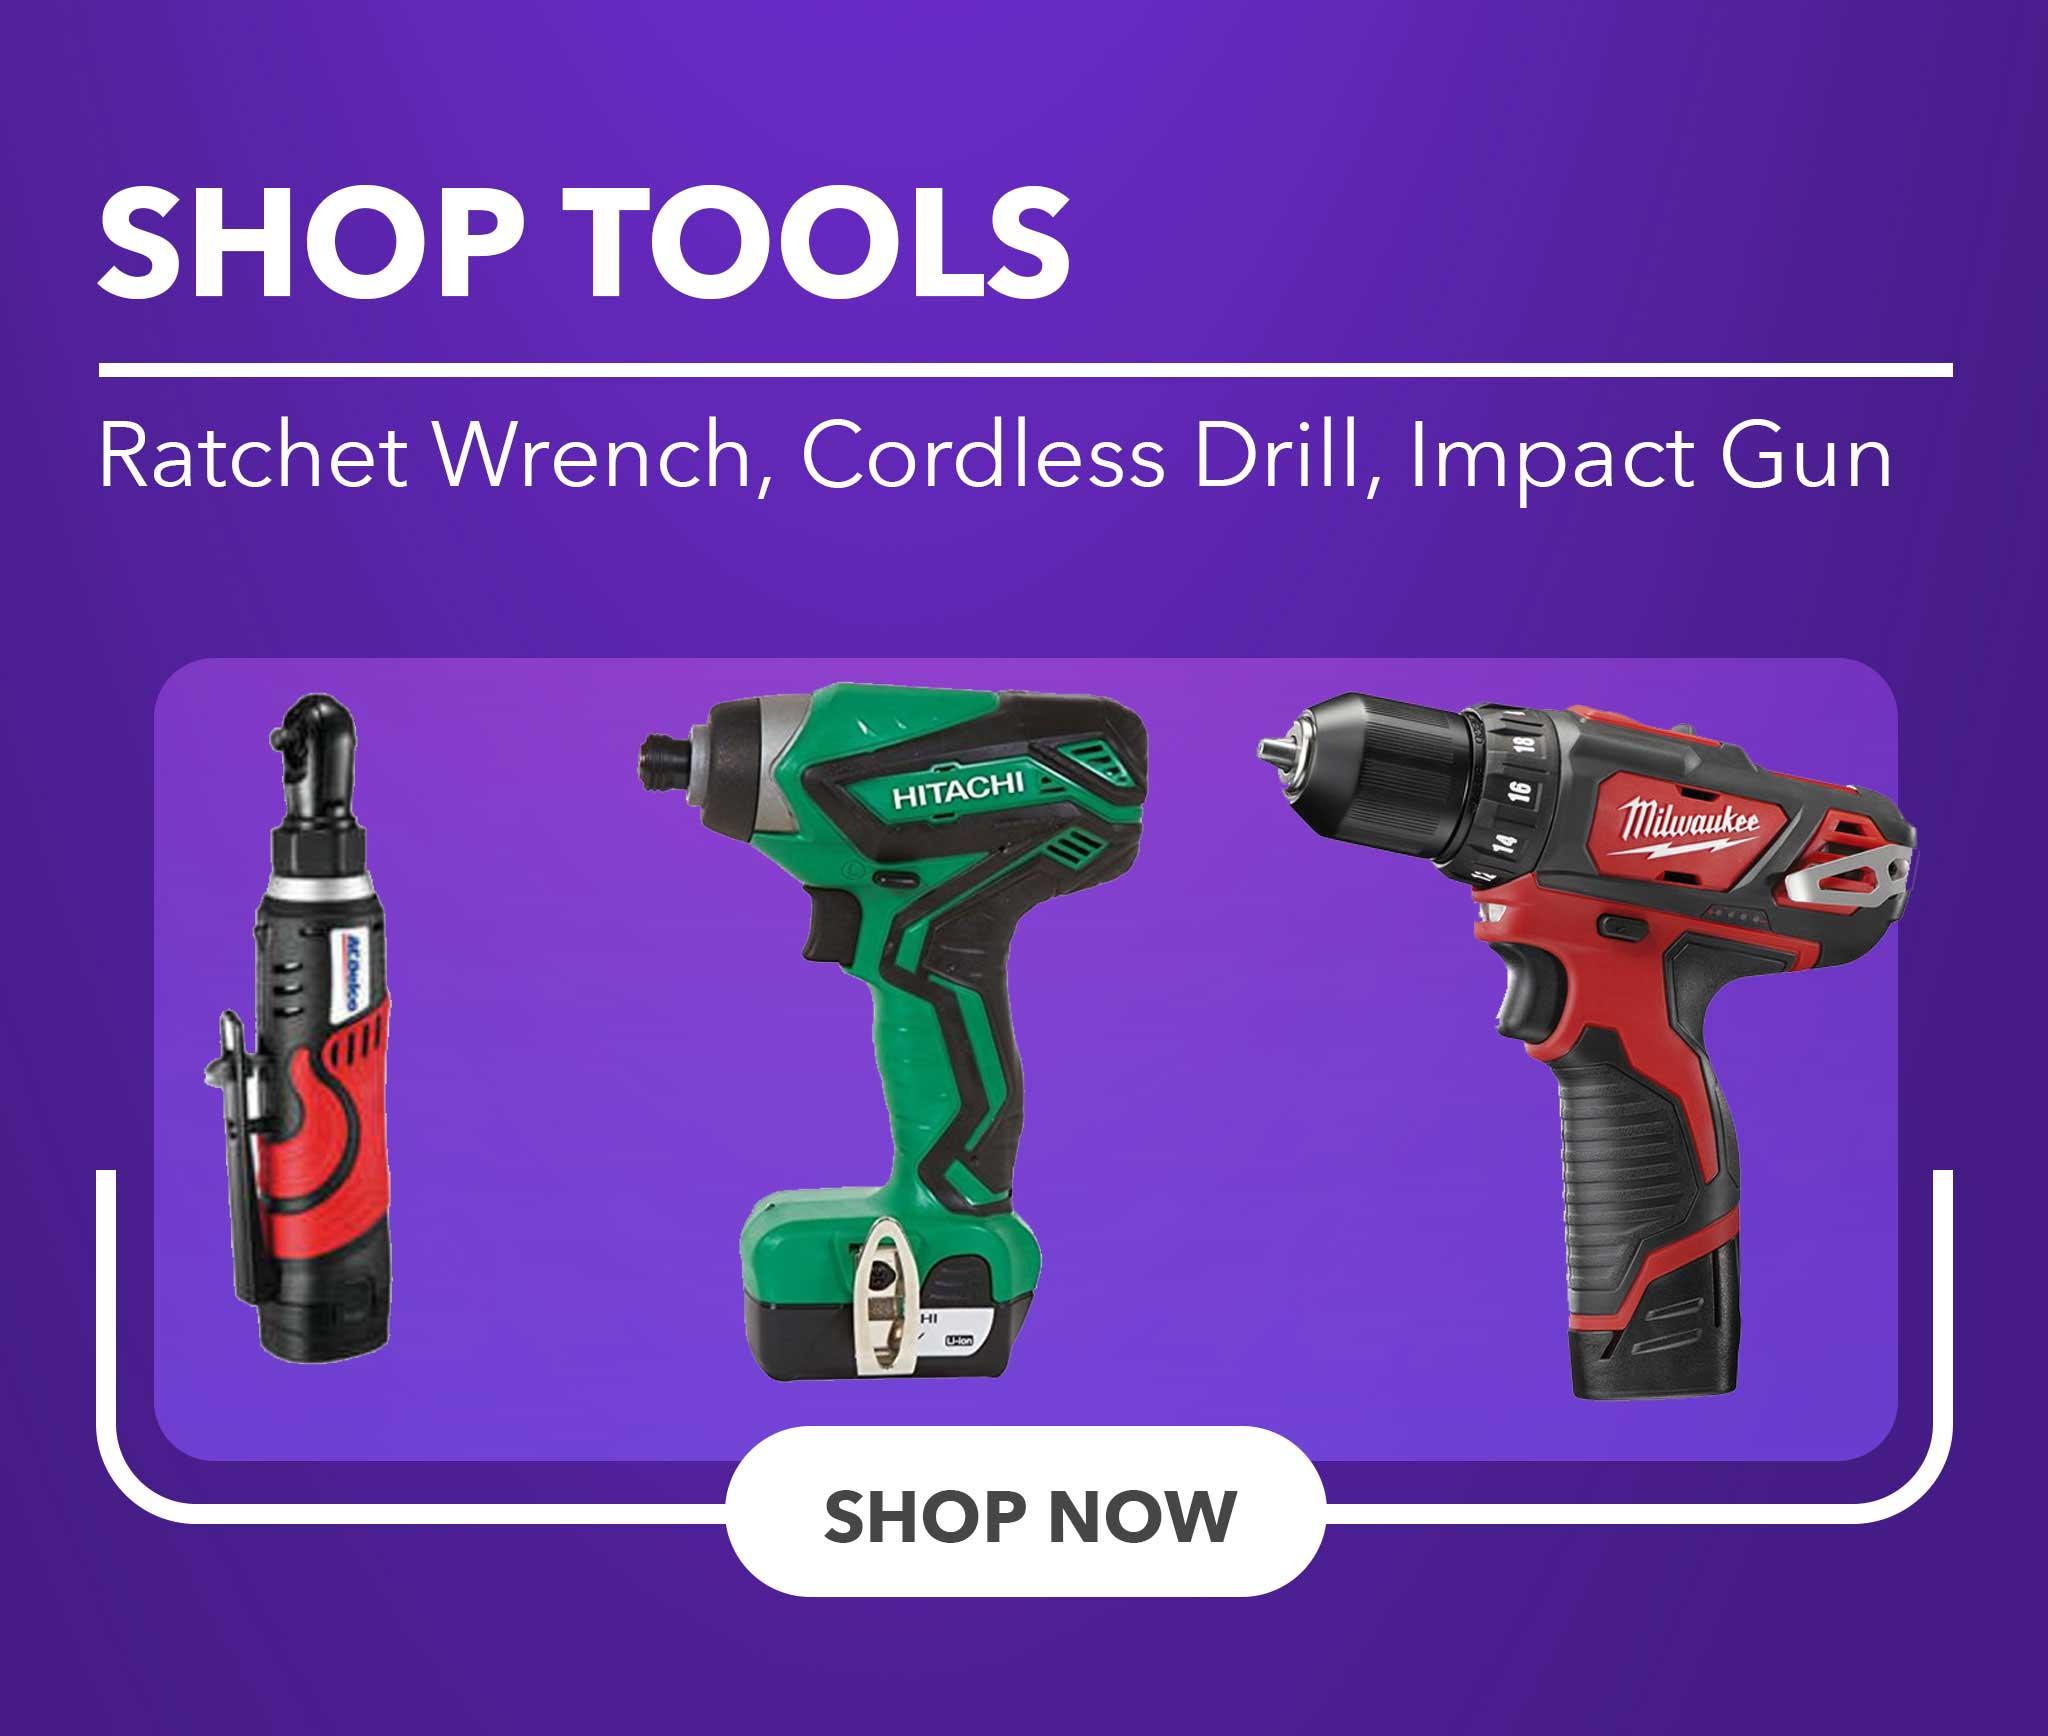 Ratchet Wrench, Cordless Drill, Impact Gun